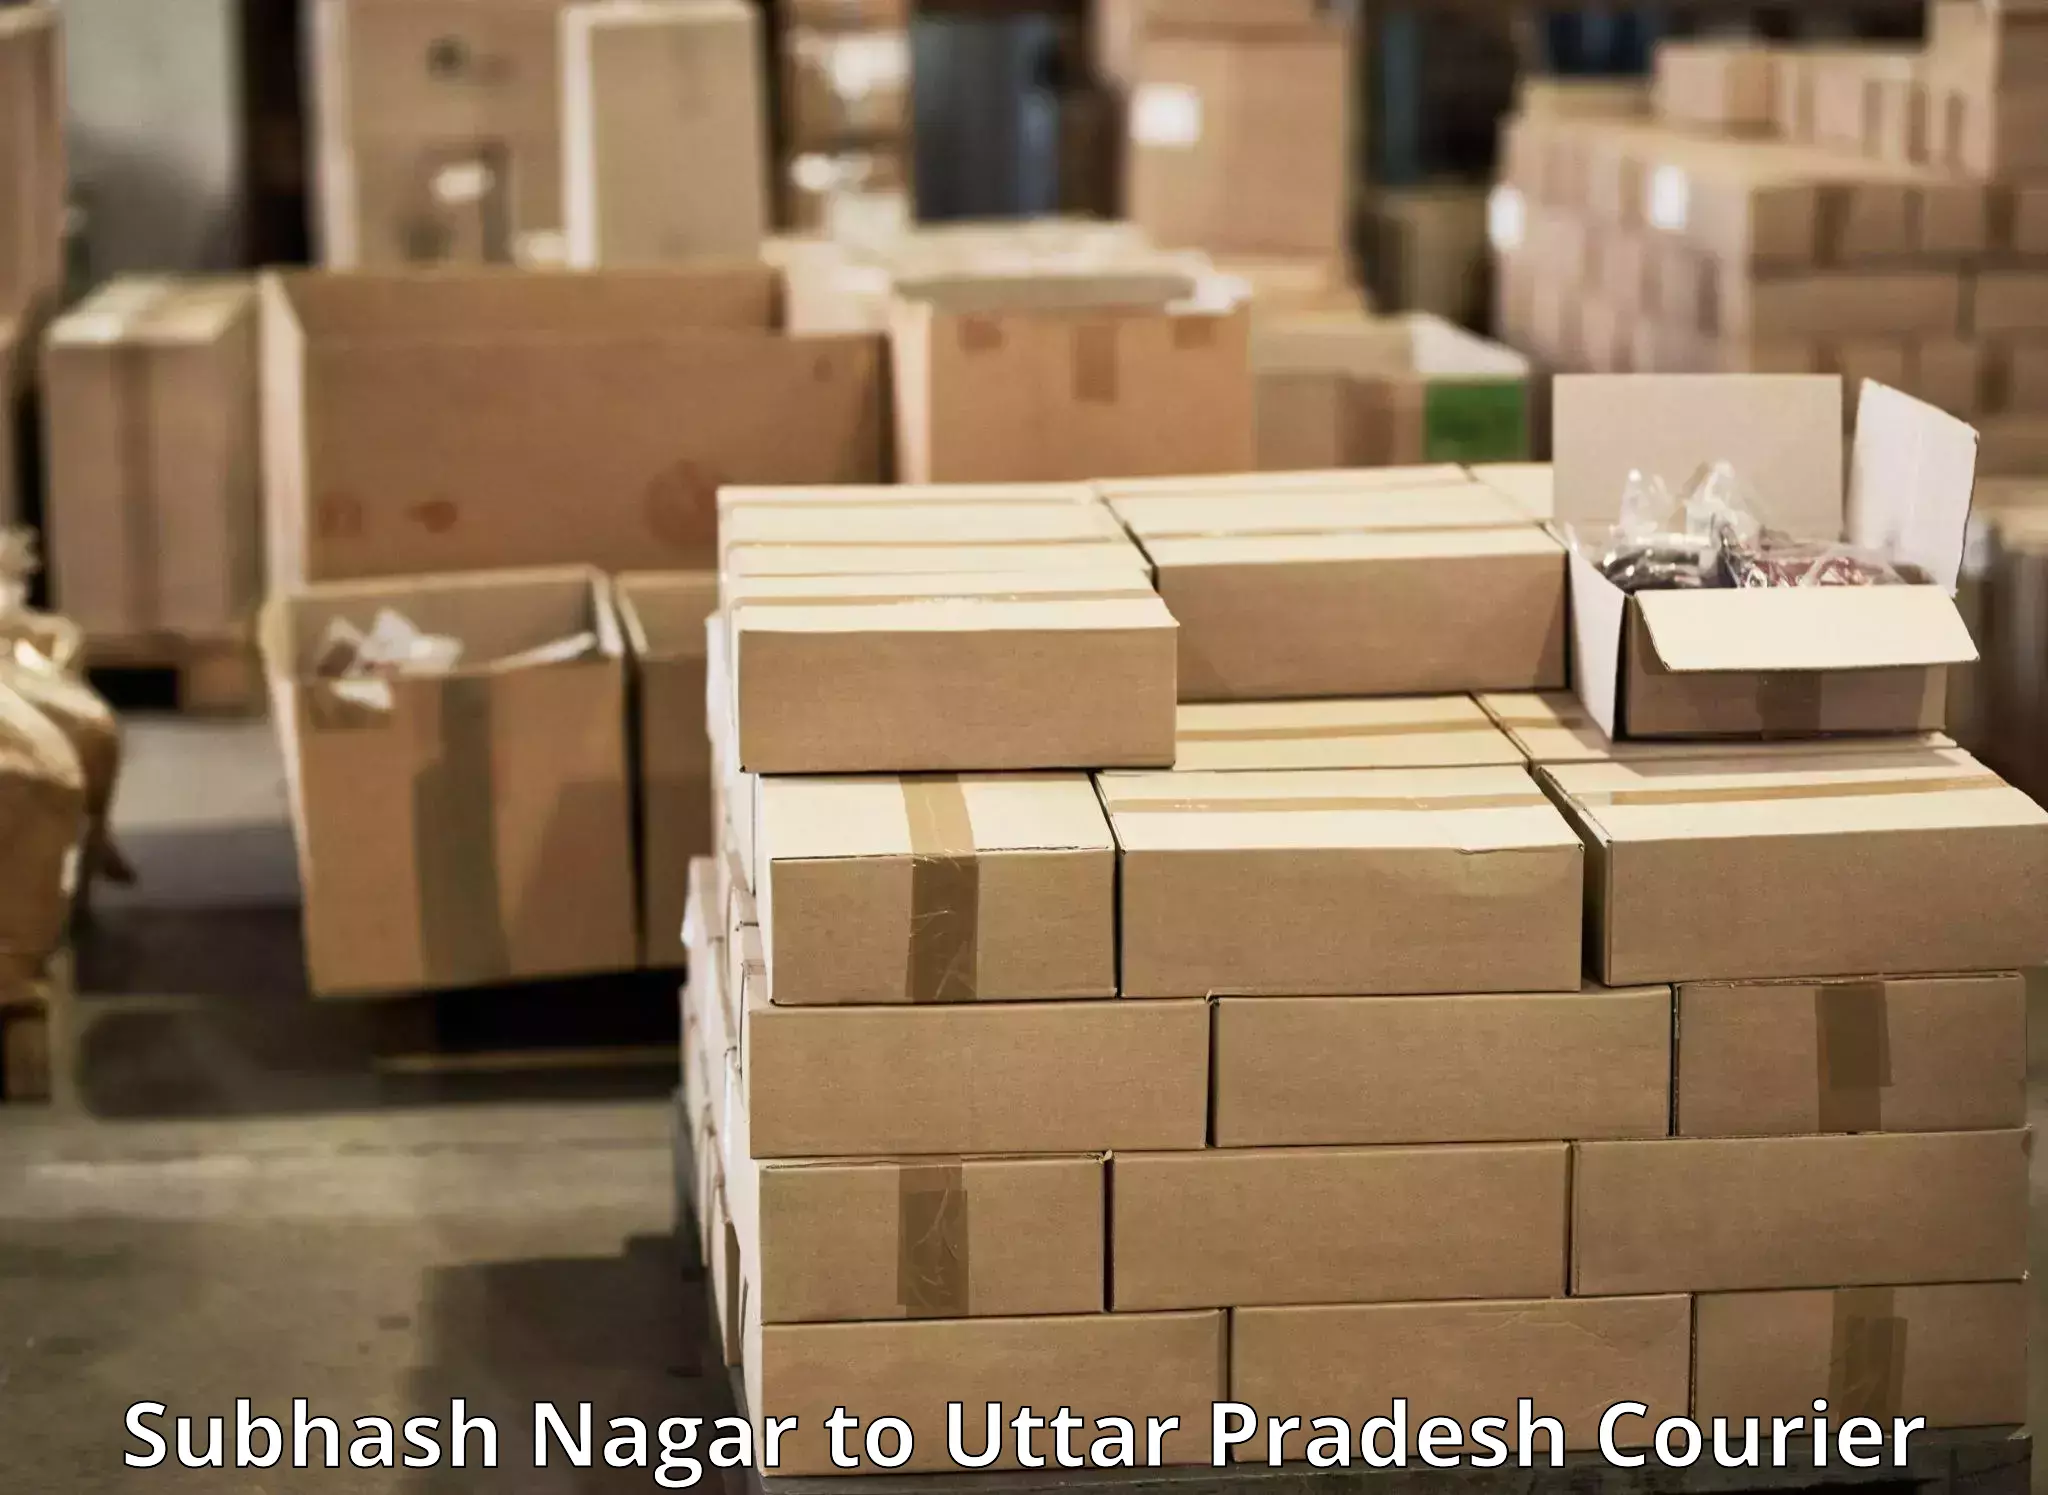 Courier service comparison Subhash Nagar to Modinagar